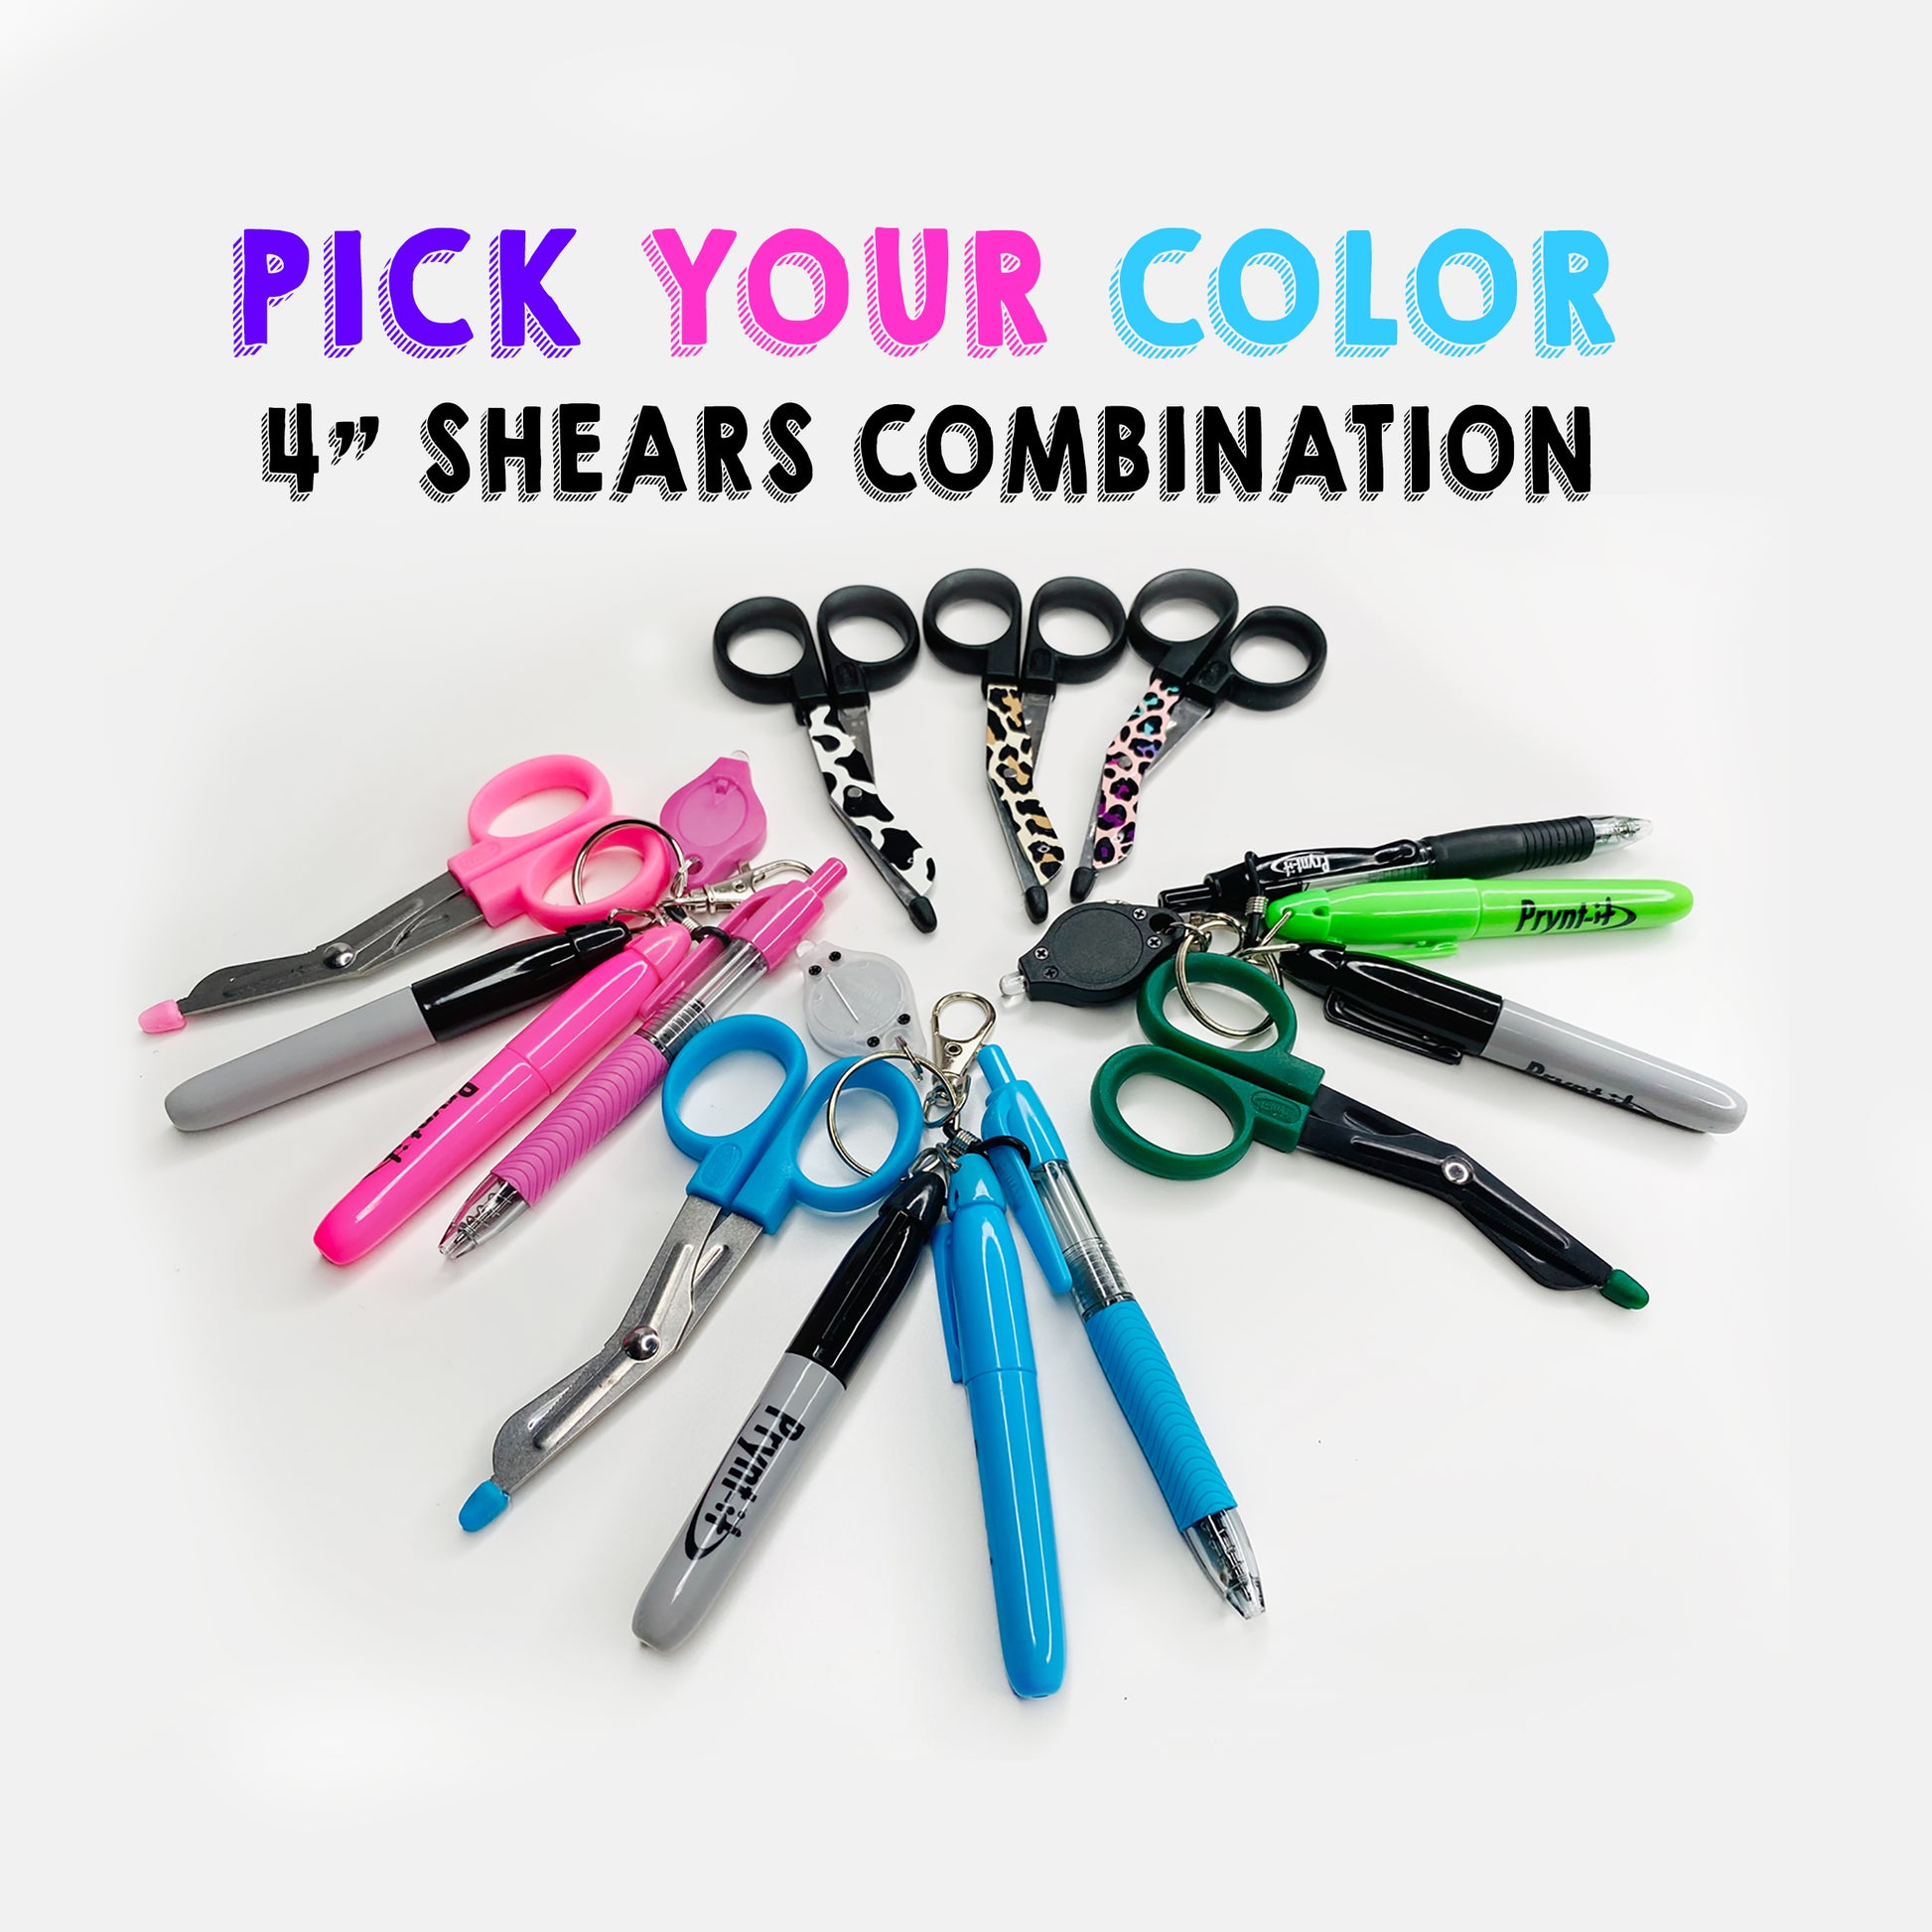 Pick Your Color Mini Trauma Shears Combo – Prynt-it Creates